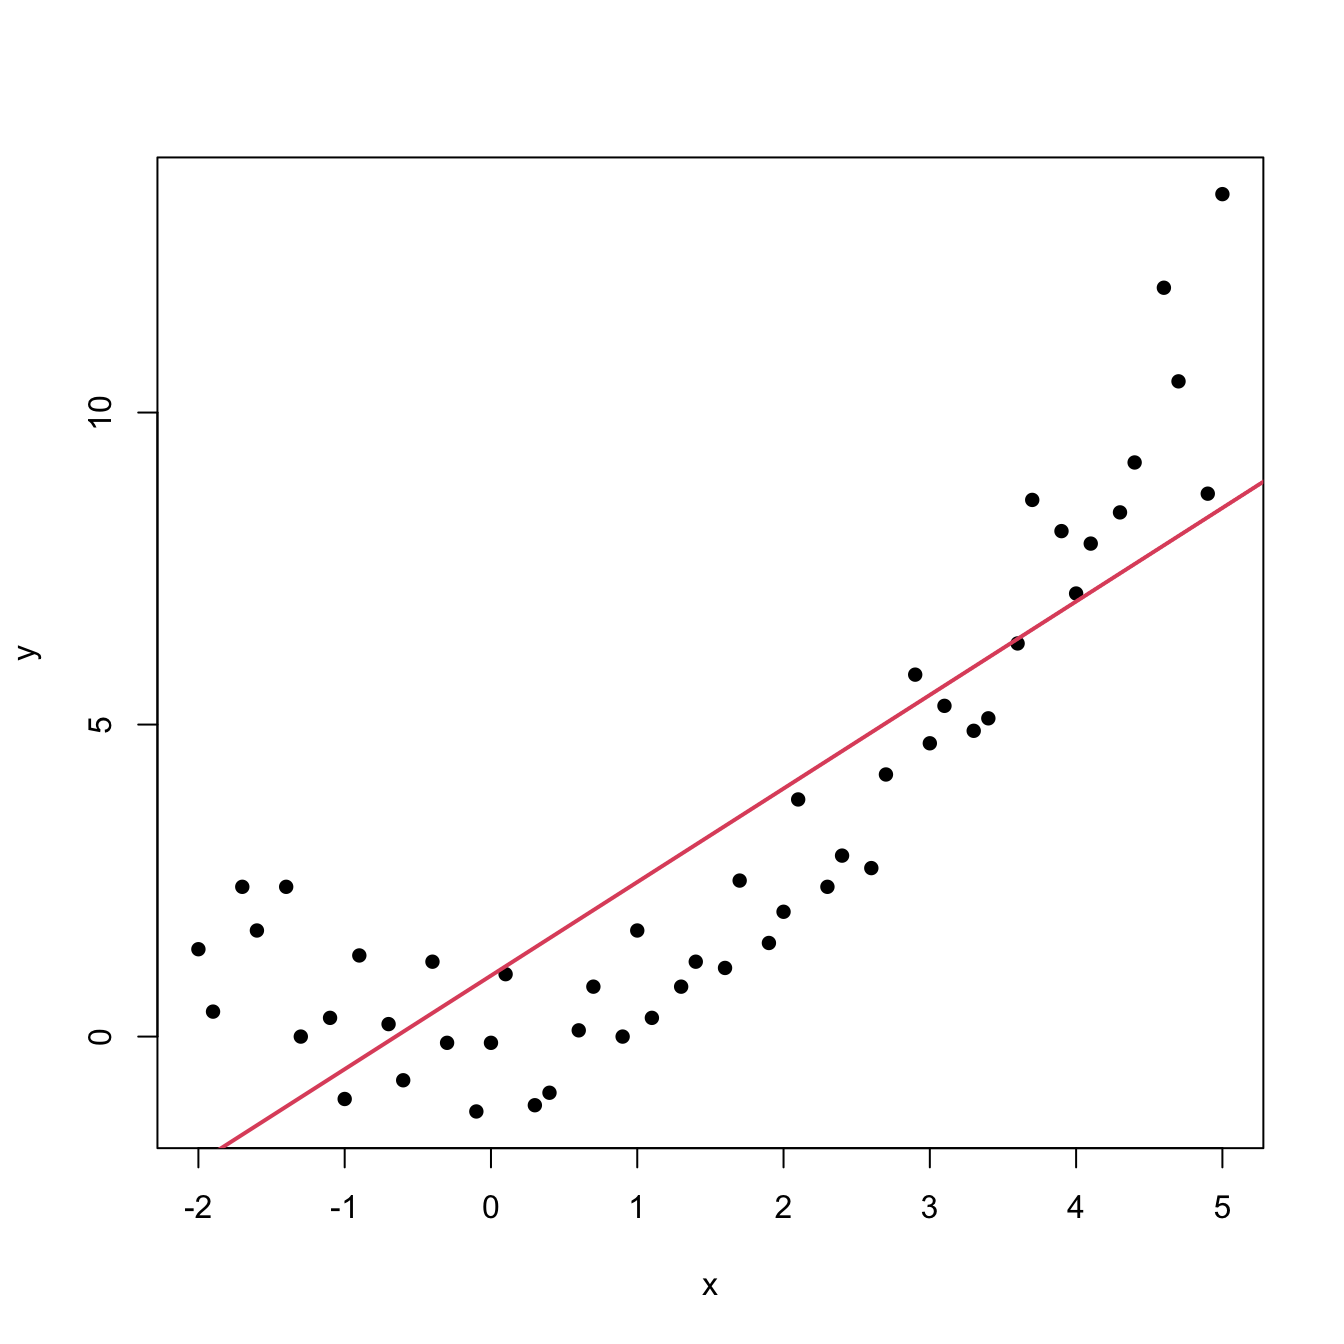 Left: quadratic pattern when plotting $Y$ against $X$. Right: linearized pattern when plotting $Y$ against $X^2$.